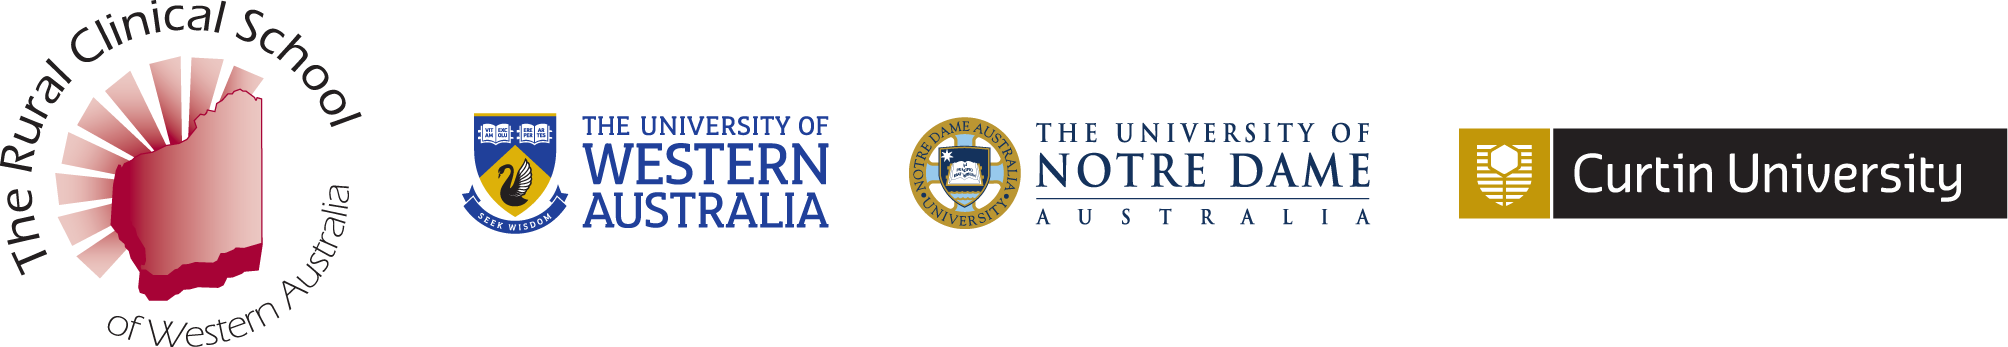 Image of the university logos.